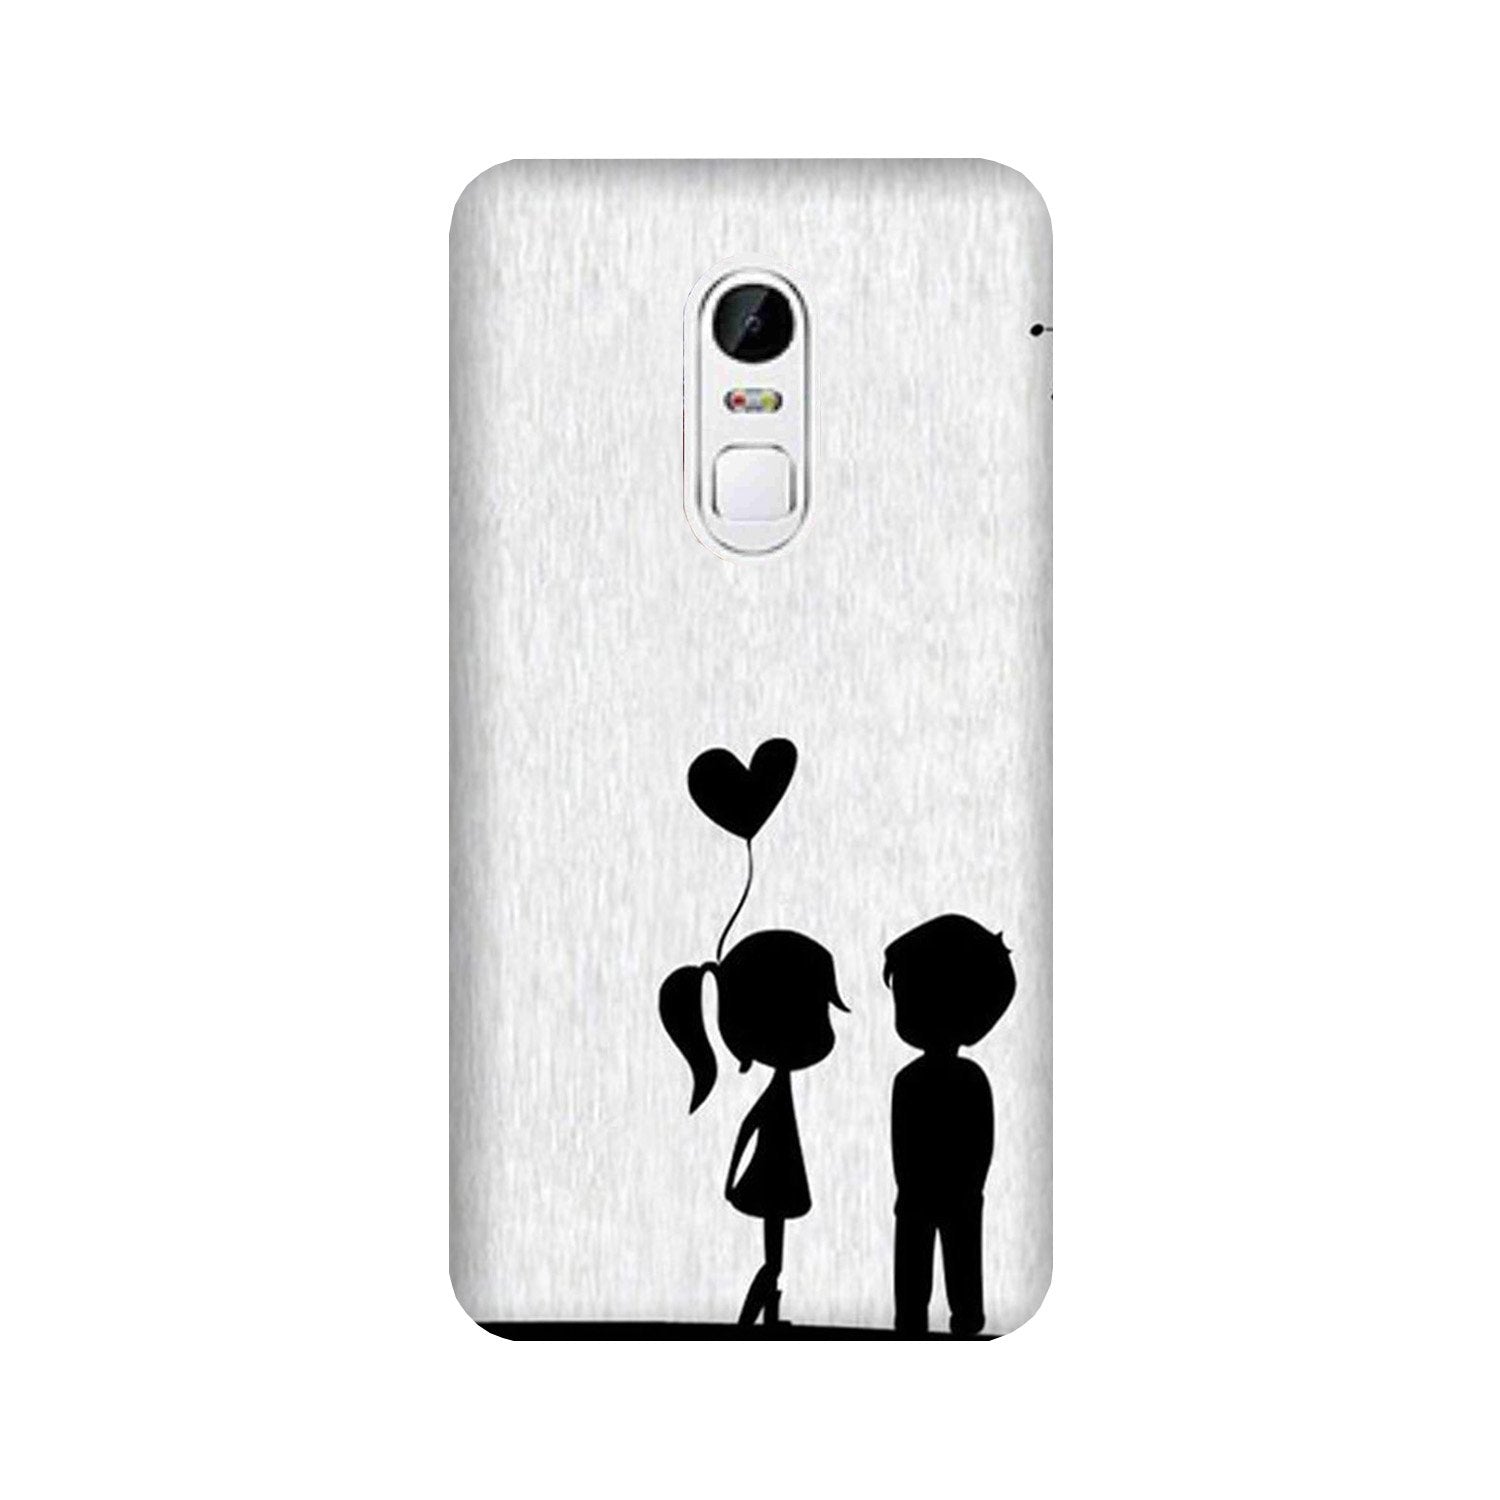 Cute Kid Couple Case for Lenovo Vibe X3 (Design No. 283)